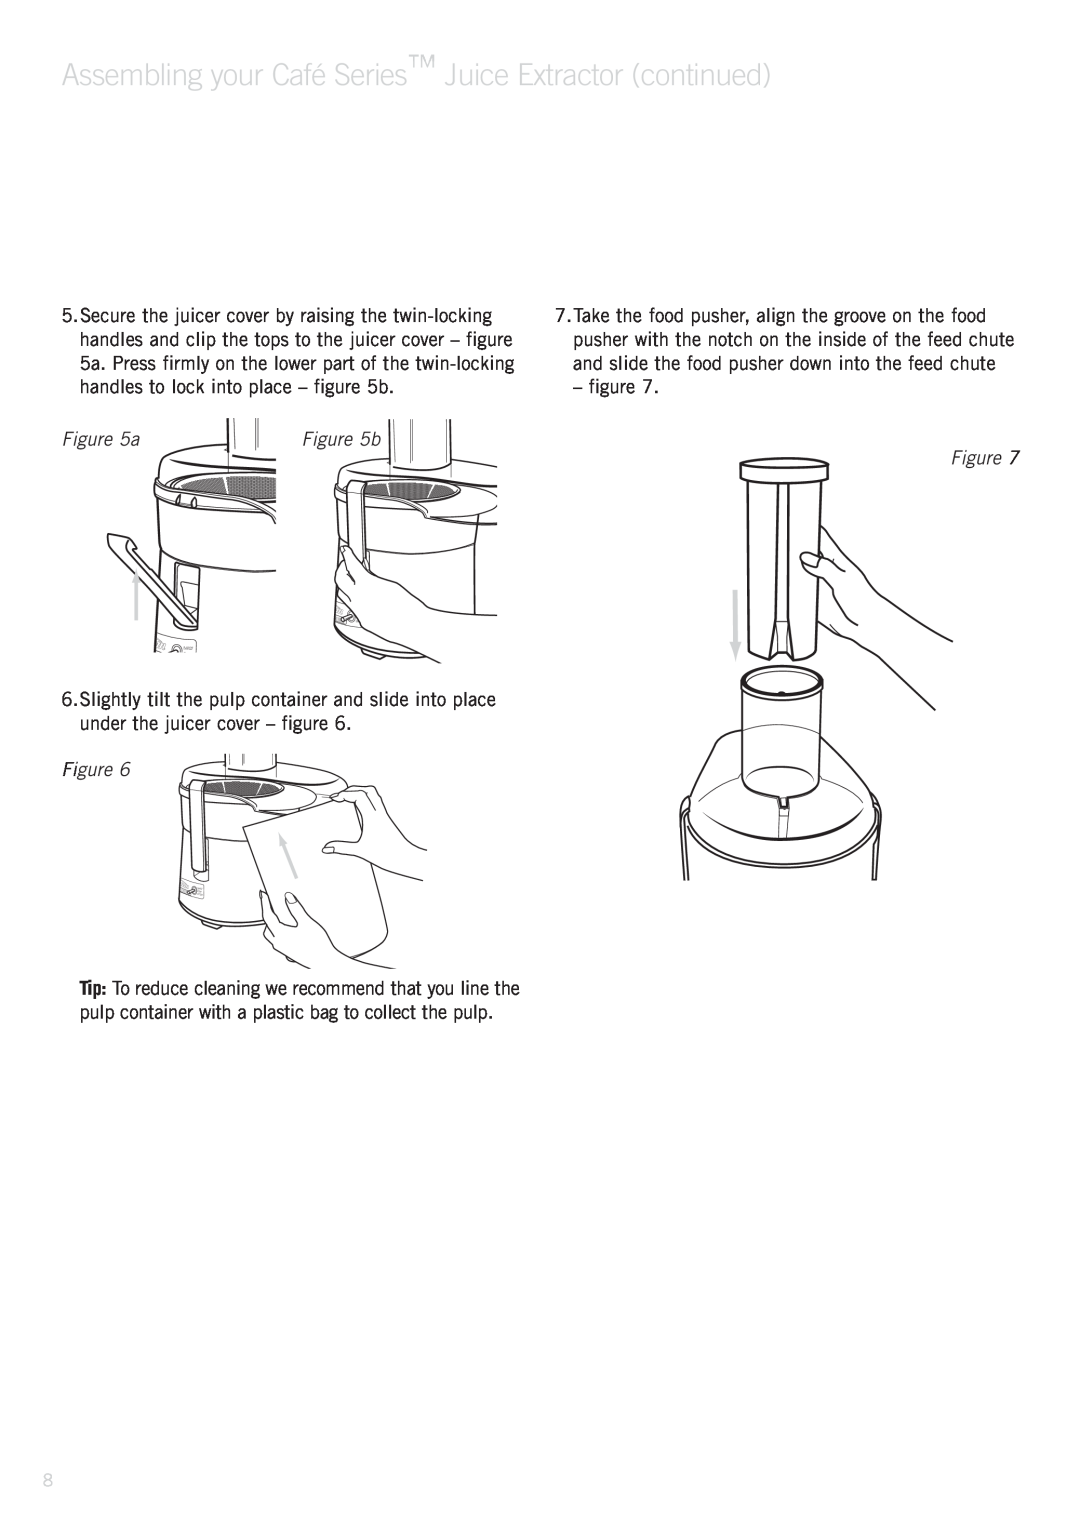 Sunbeam JE8600 manual Assembling your Café Series Juice Extractor continued 